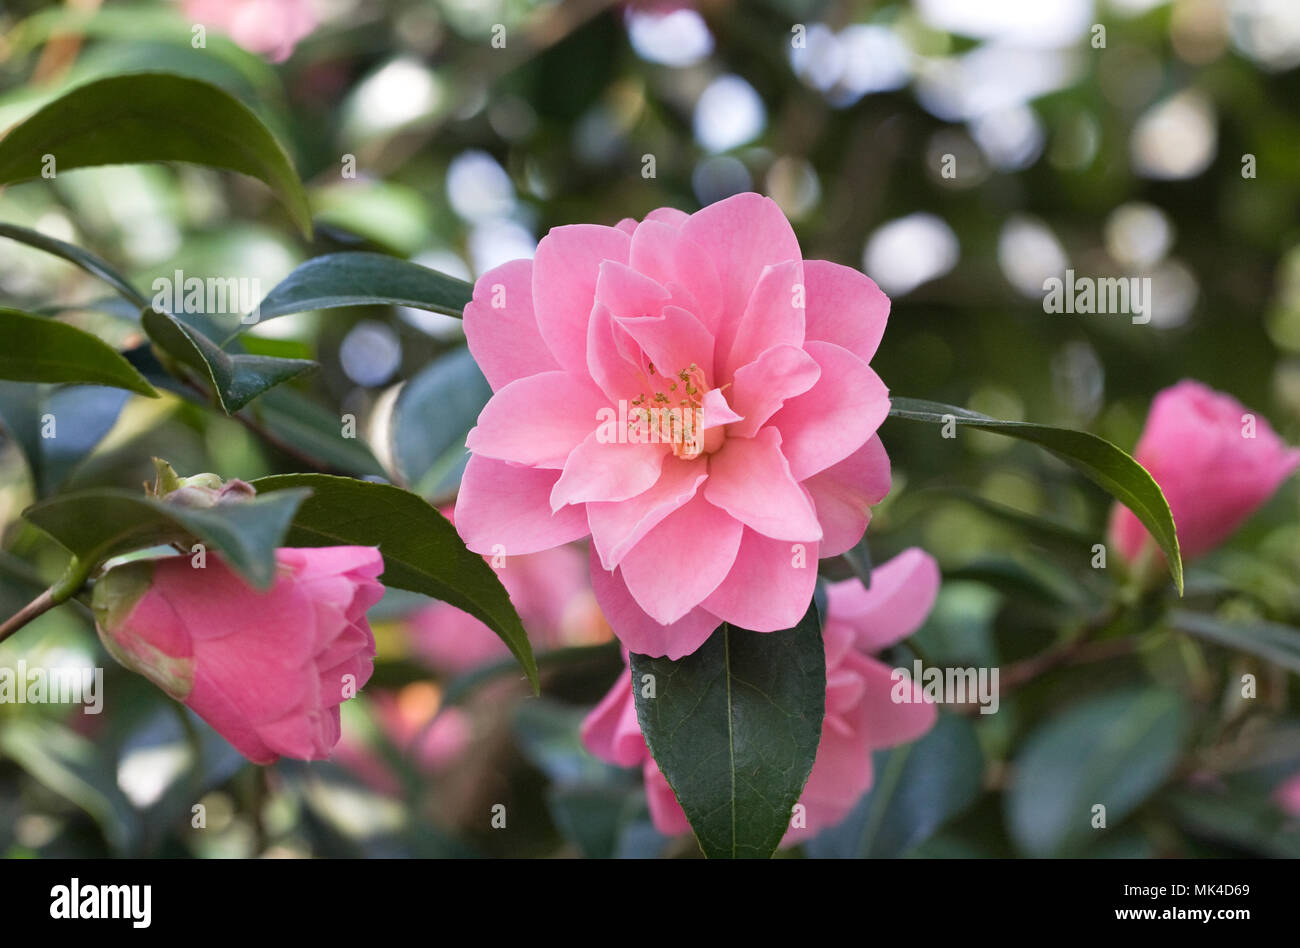 Camellia x williamsii 'Daintiness' flowers. Stock Photo